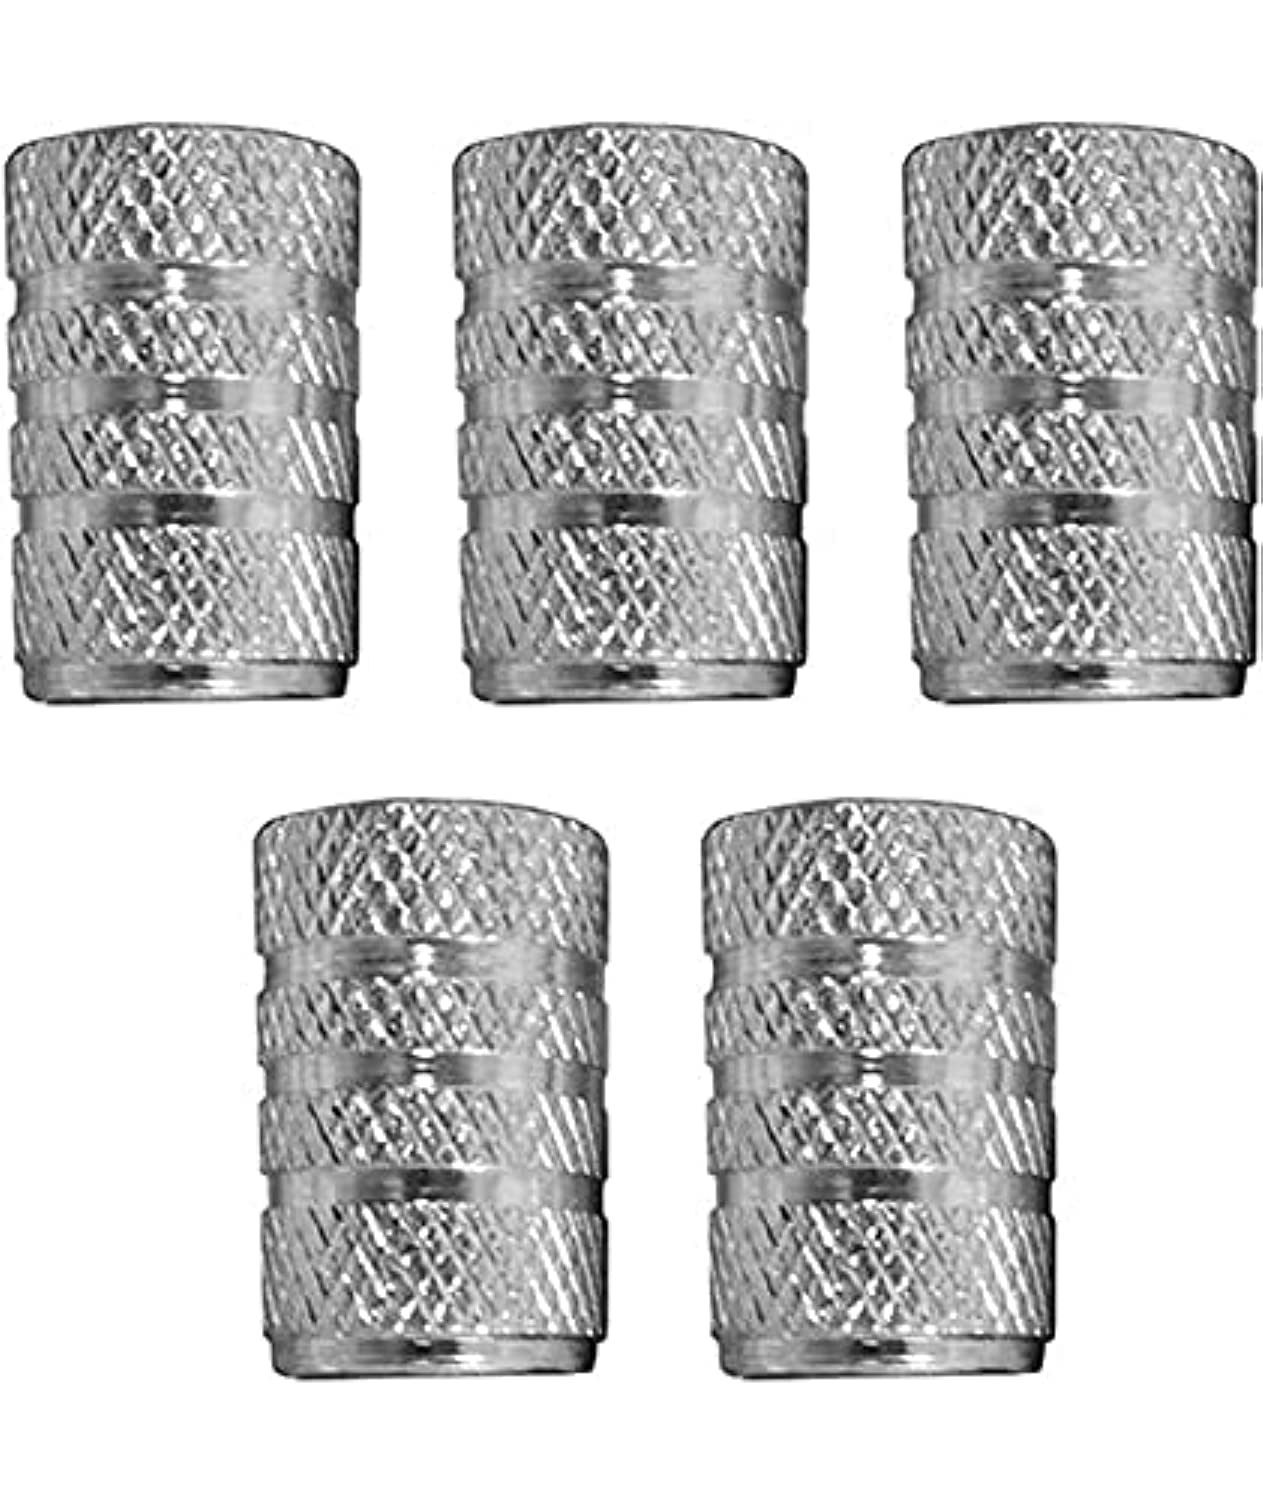 Dunlop AV Ventilkappen Aluminium Silber 5 Pieces von Dunlop Automotive